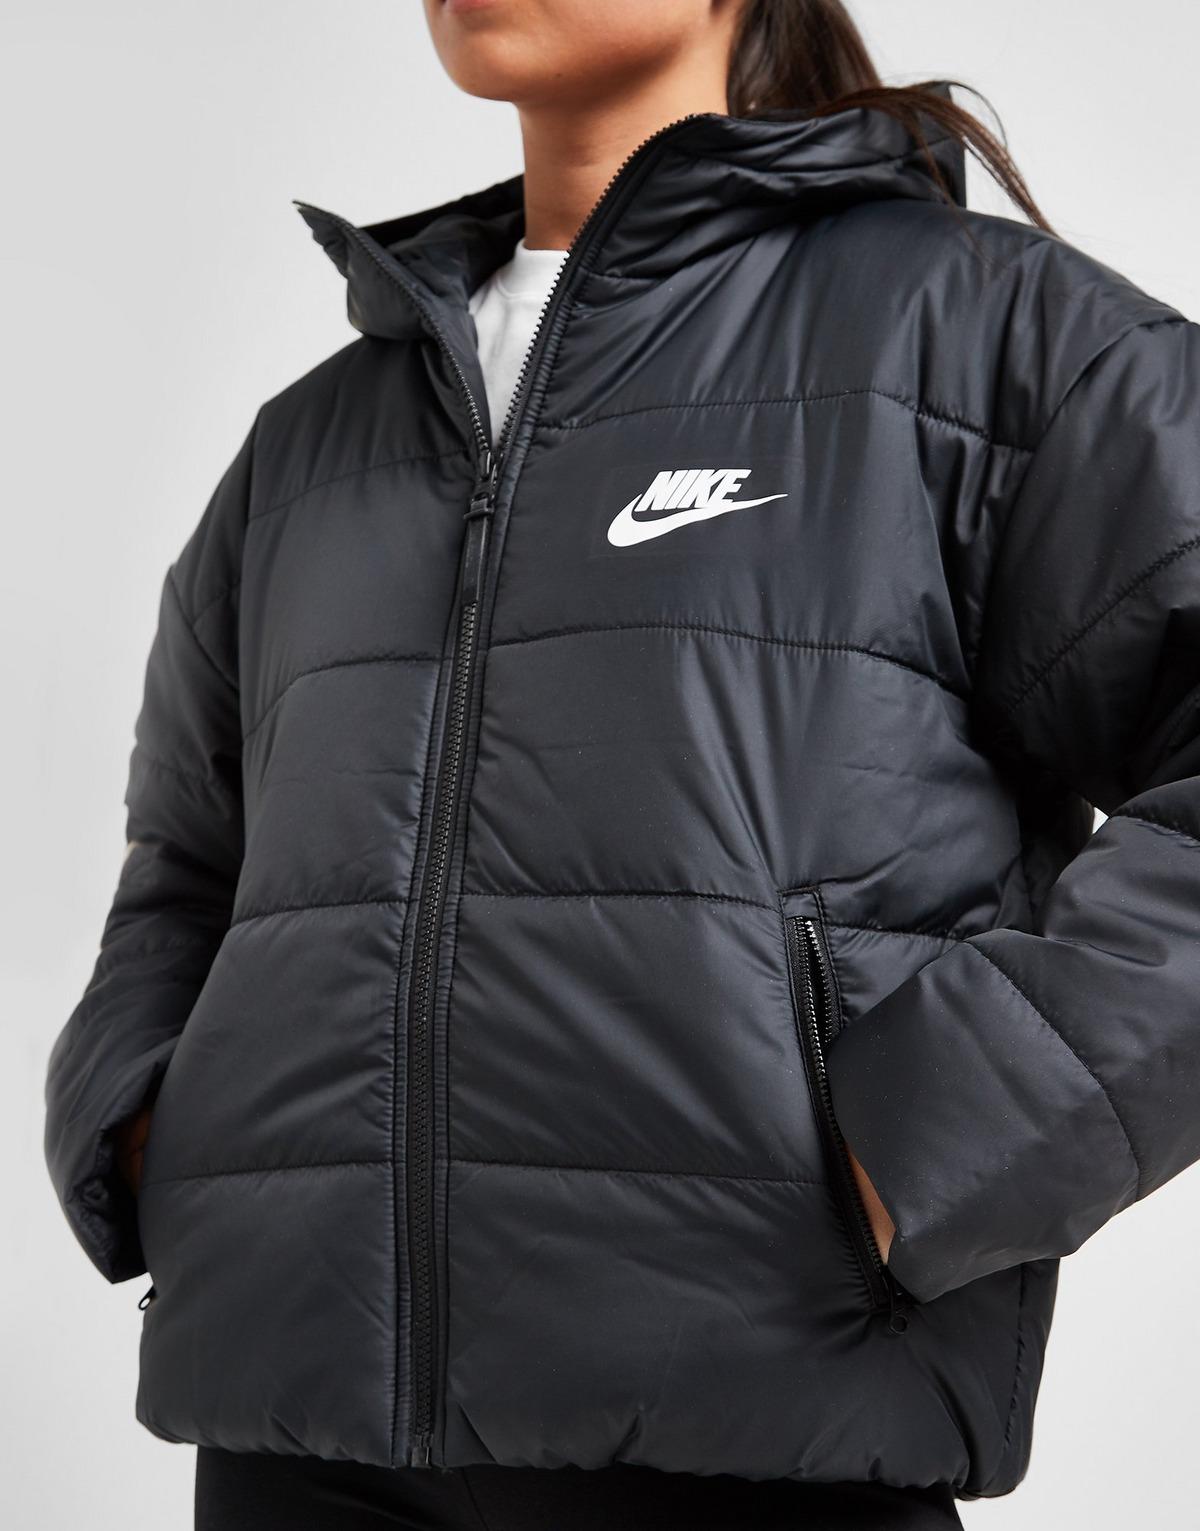 Nike Synthetic Core Swoosh Jacket in Black/White/White (Black) - Lyst